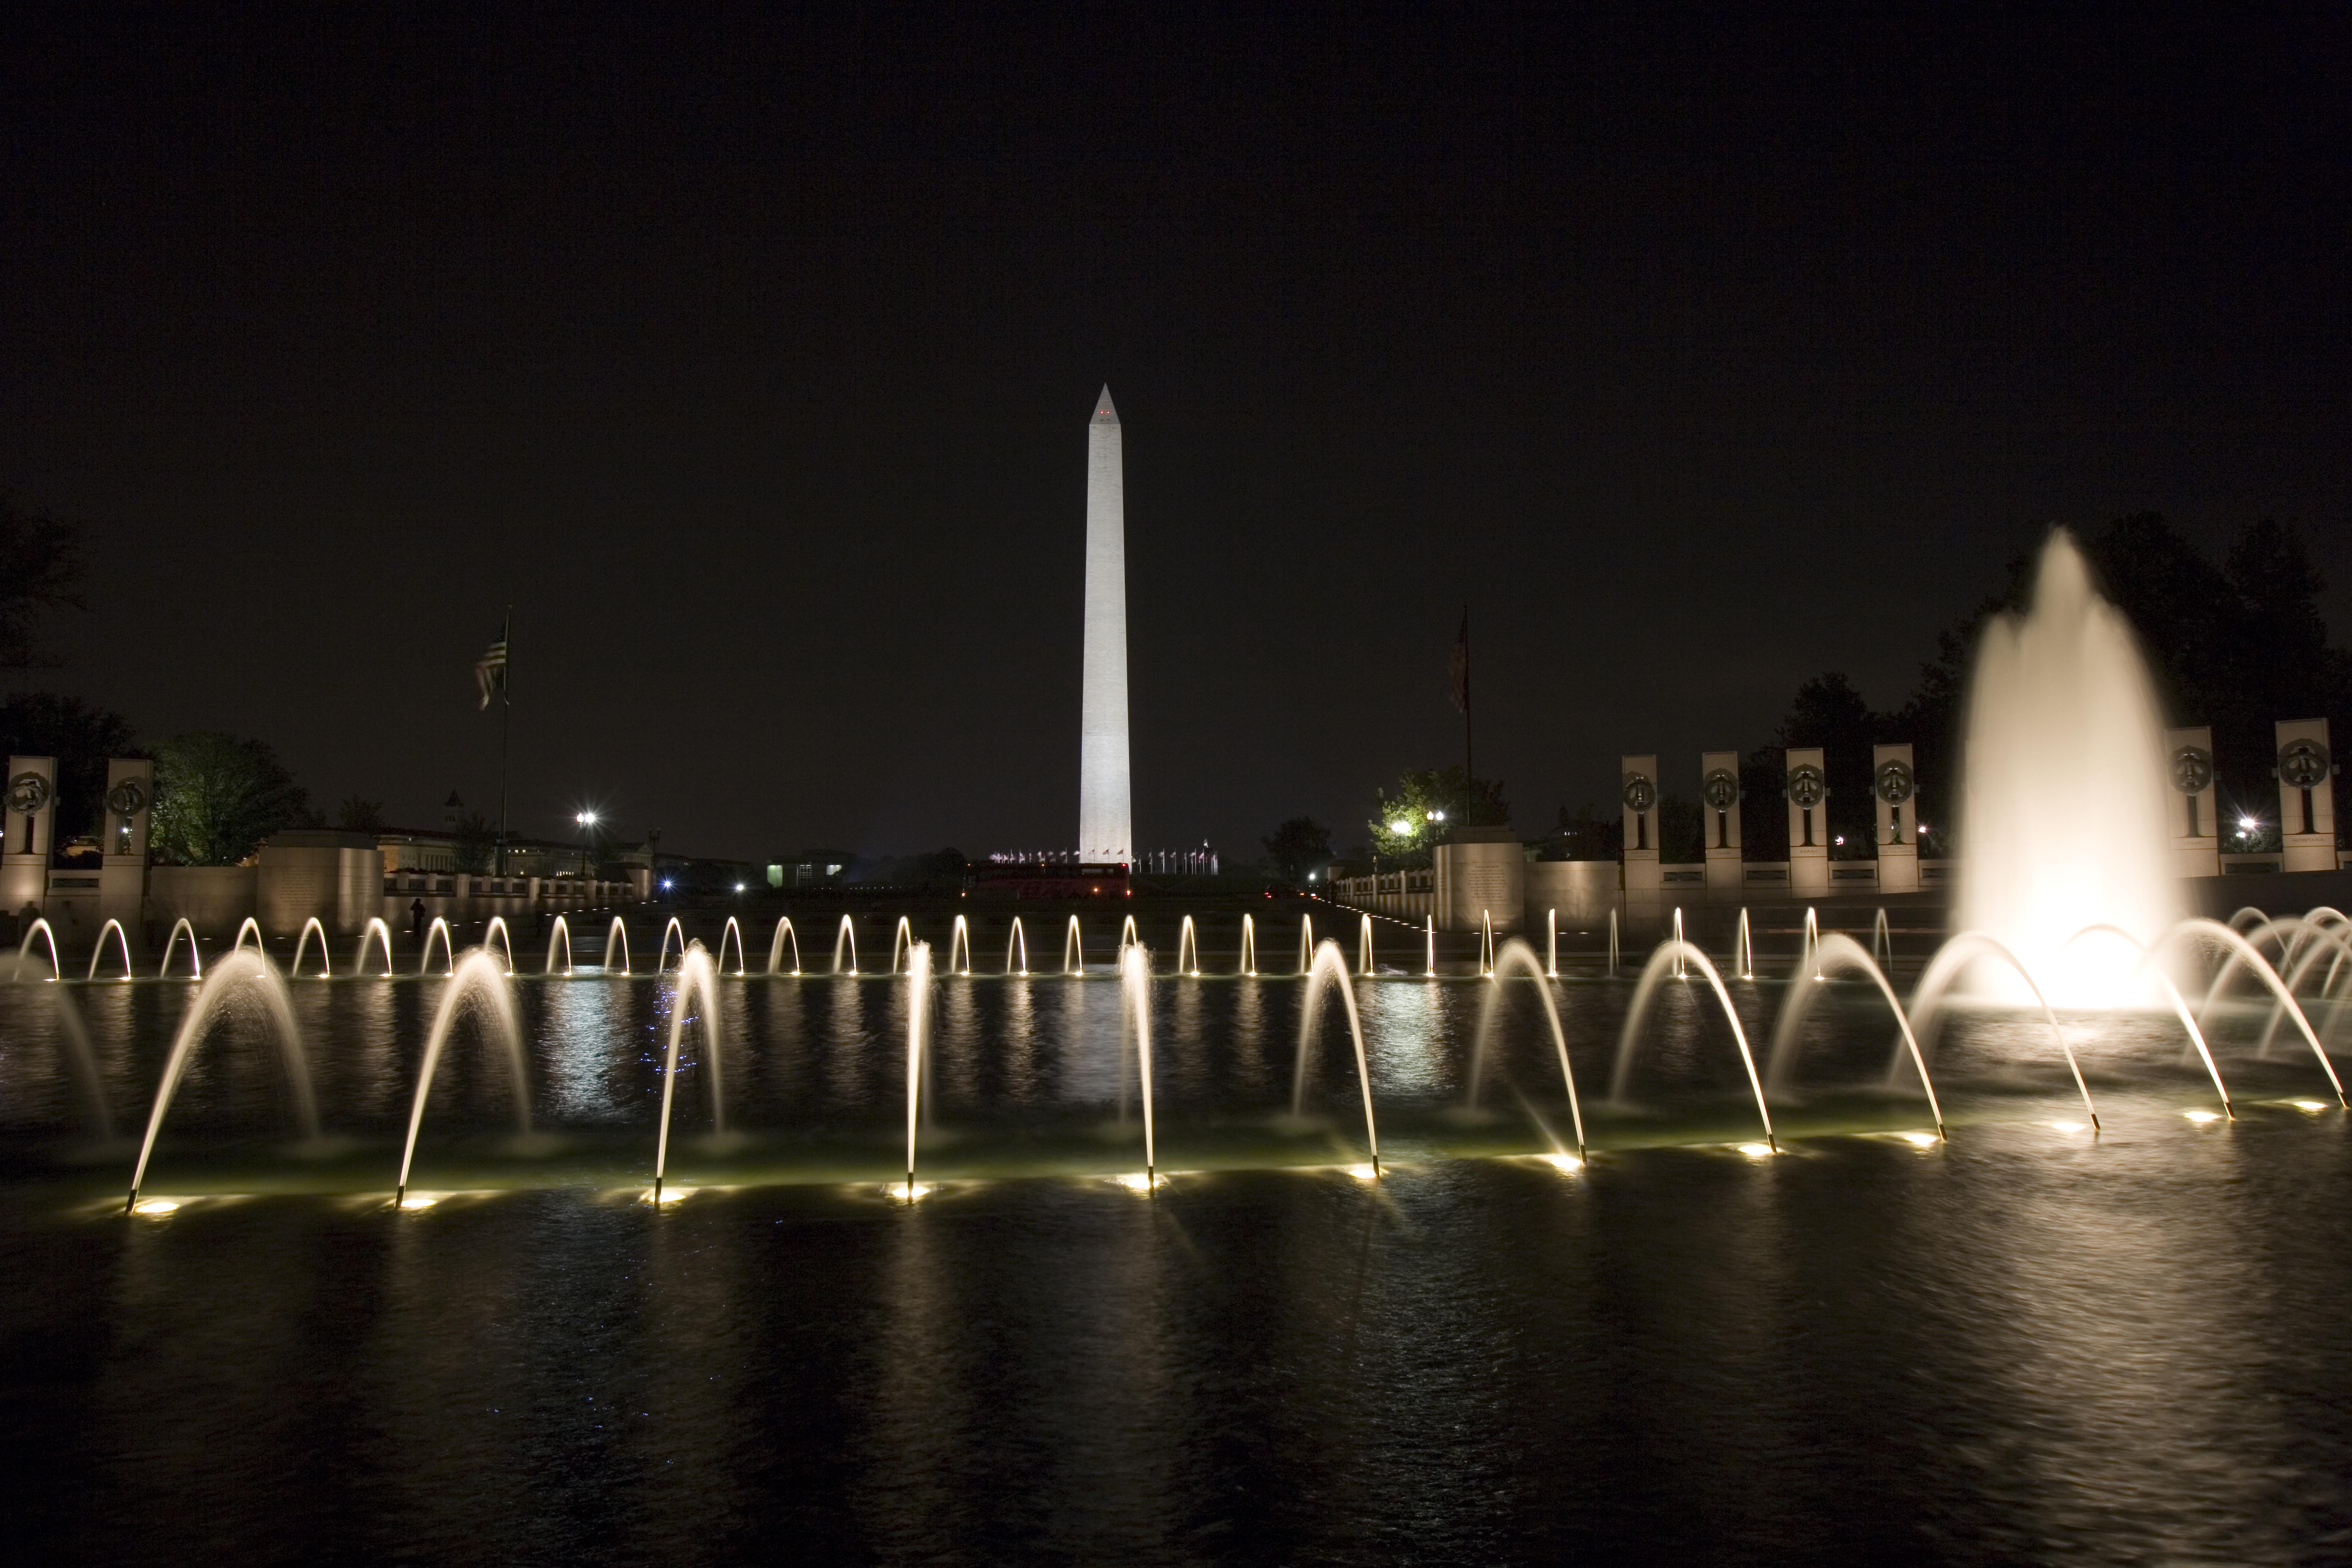 The World War II Memorial at night